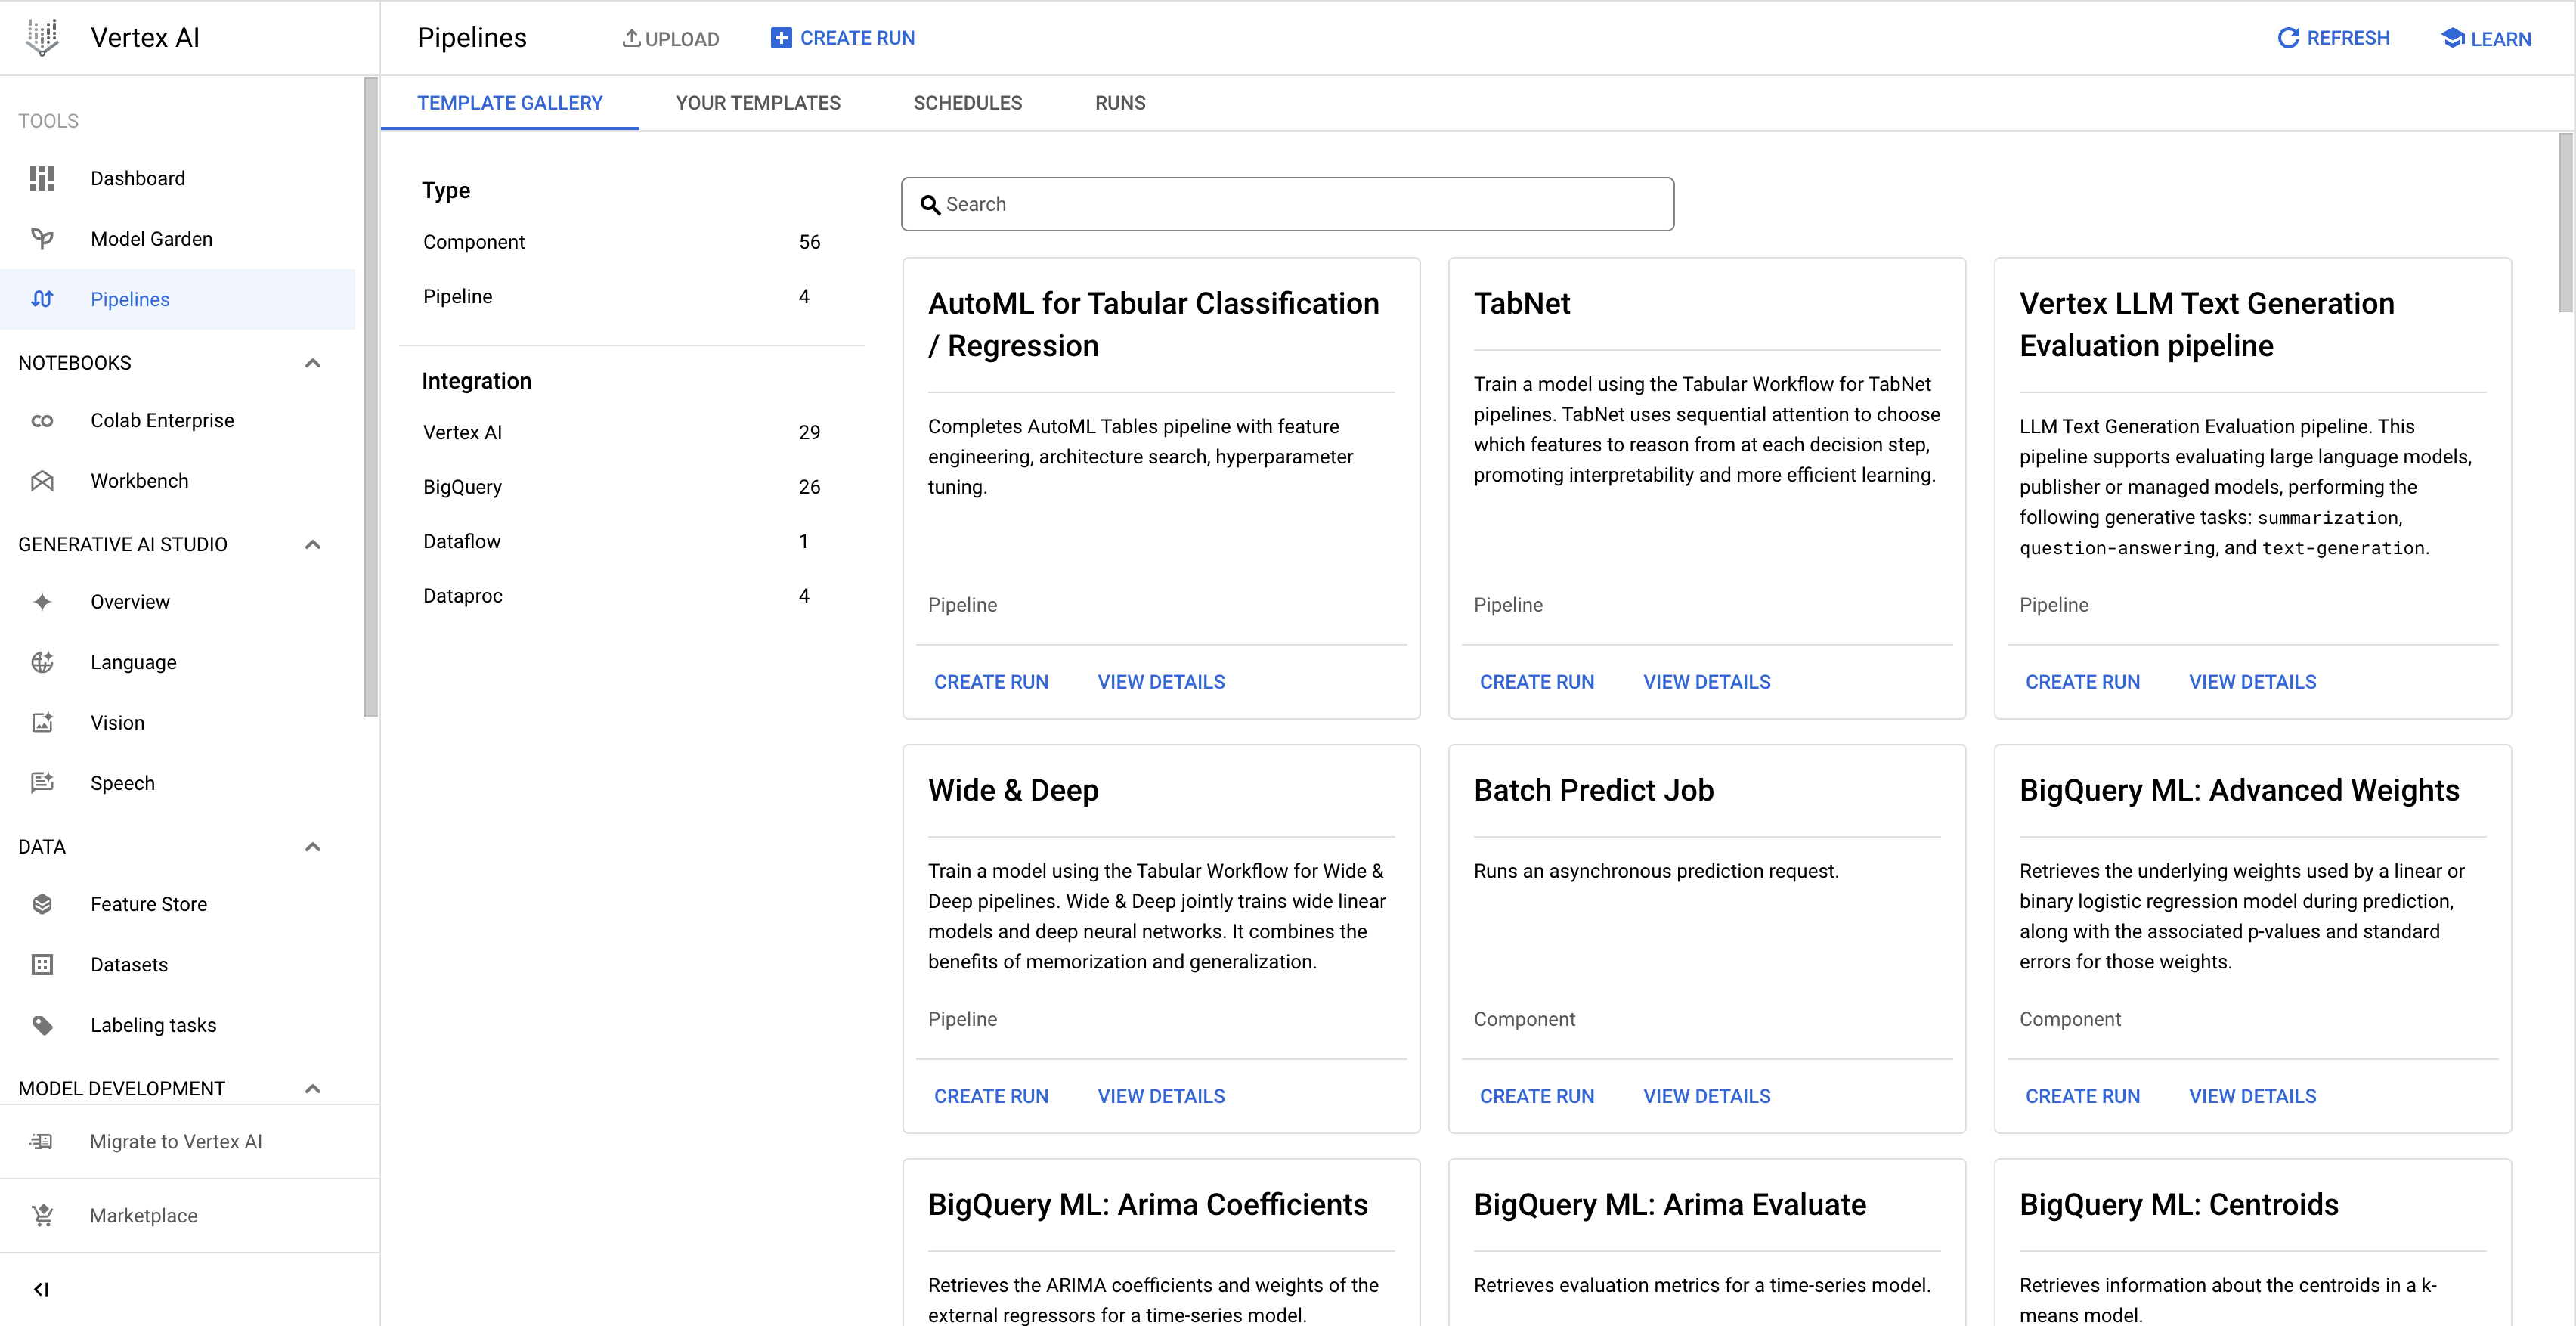 Menampilkan halaman Galeri Template yang berisi template pipeline buatan Google untuk Alur Kerja Tabular